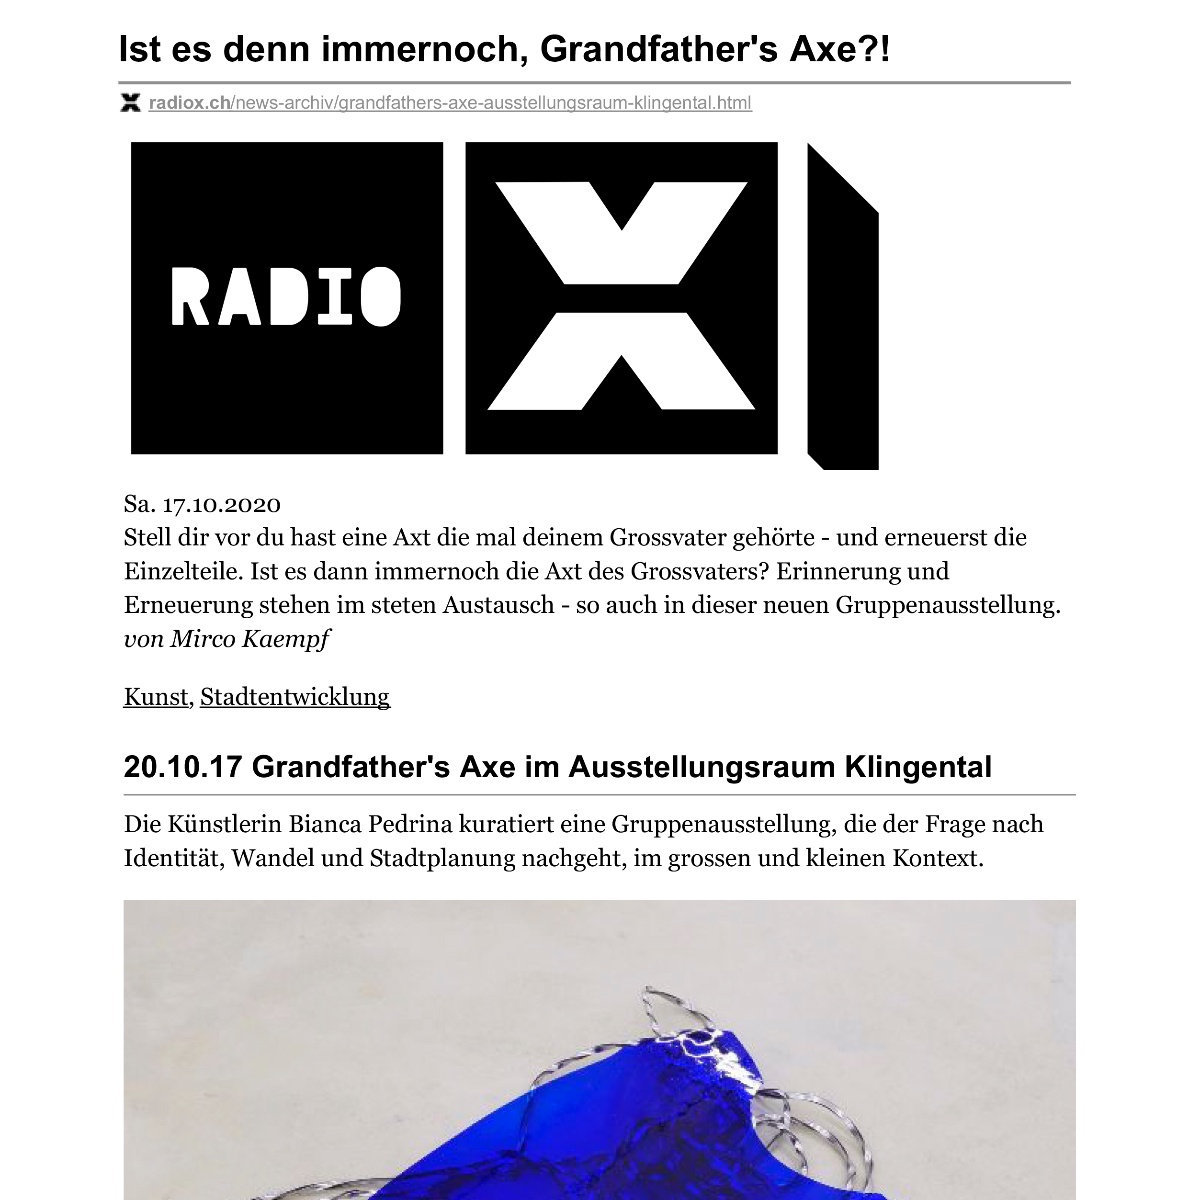 Grandfather's Axe – radiox.ch